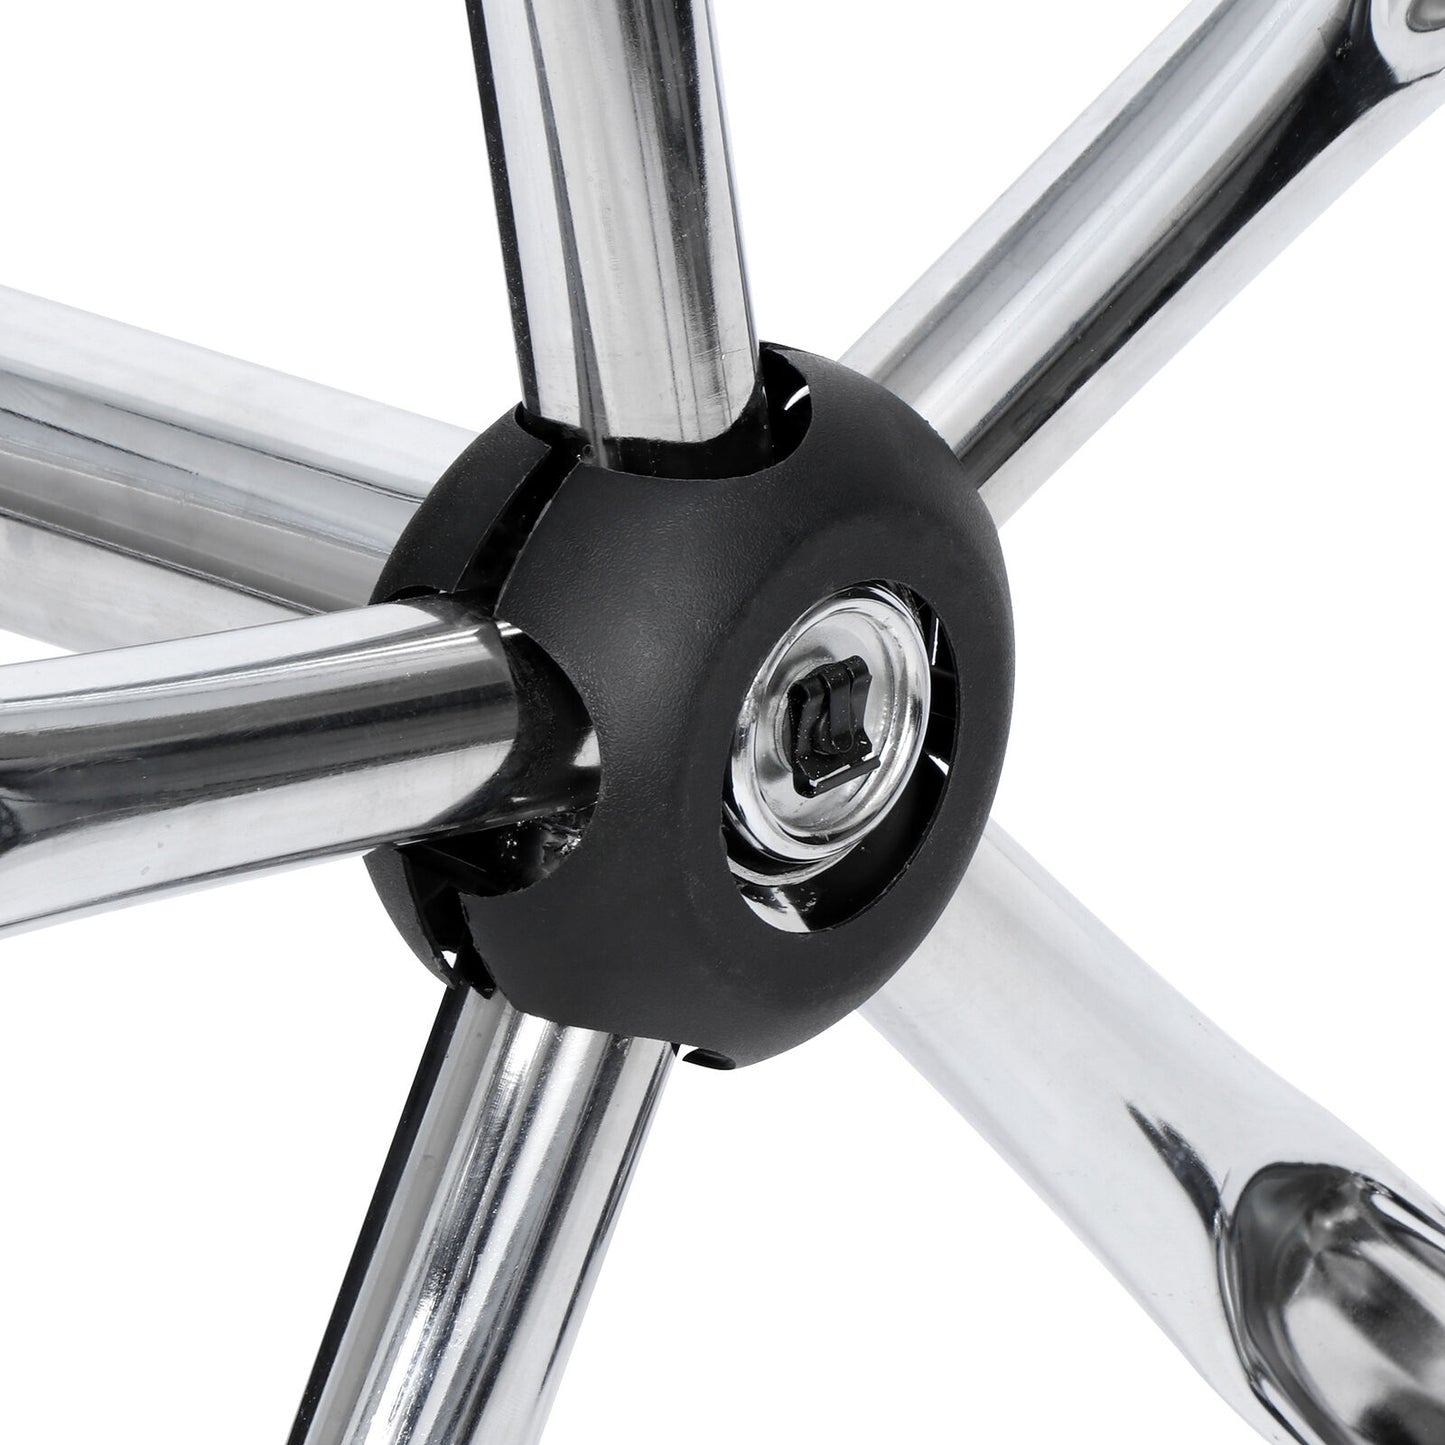 Adjustable Multi-Purpose Drafting Spa Bar Rolling Stool with Wheels Black